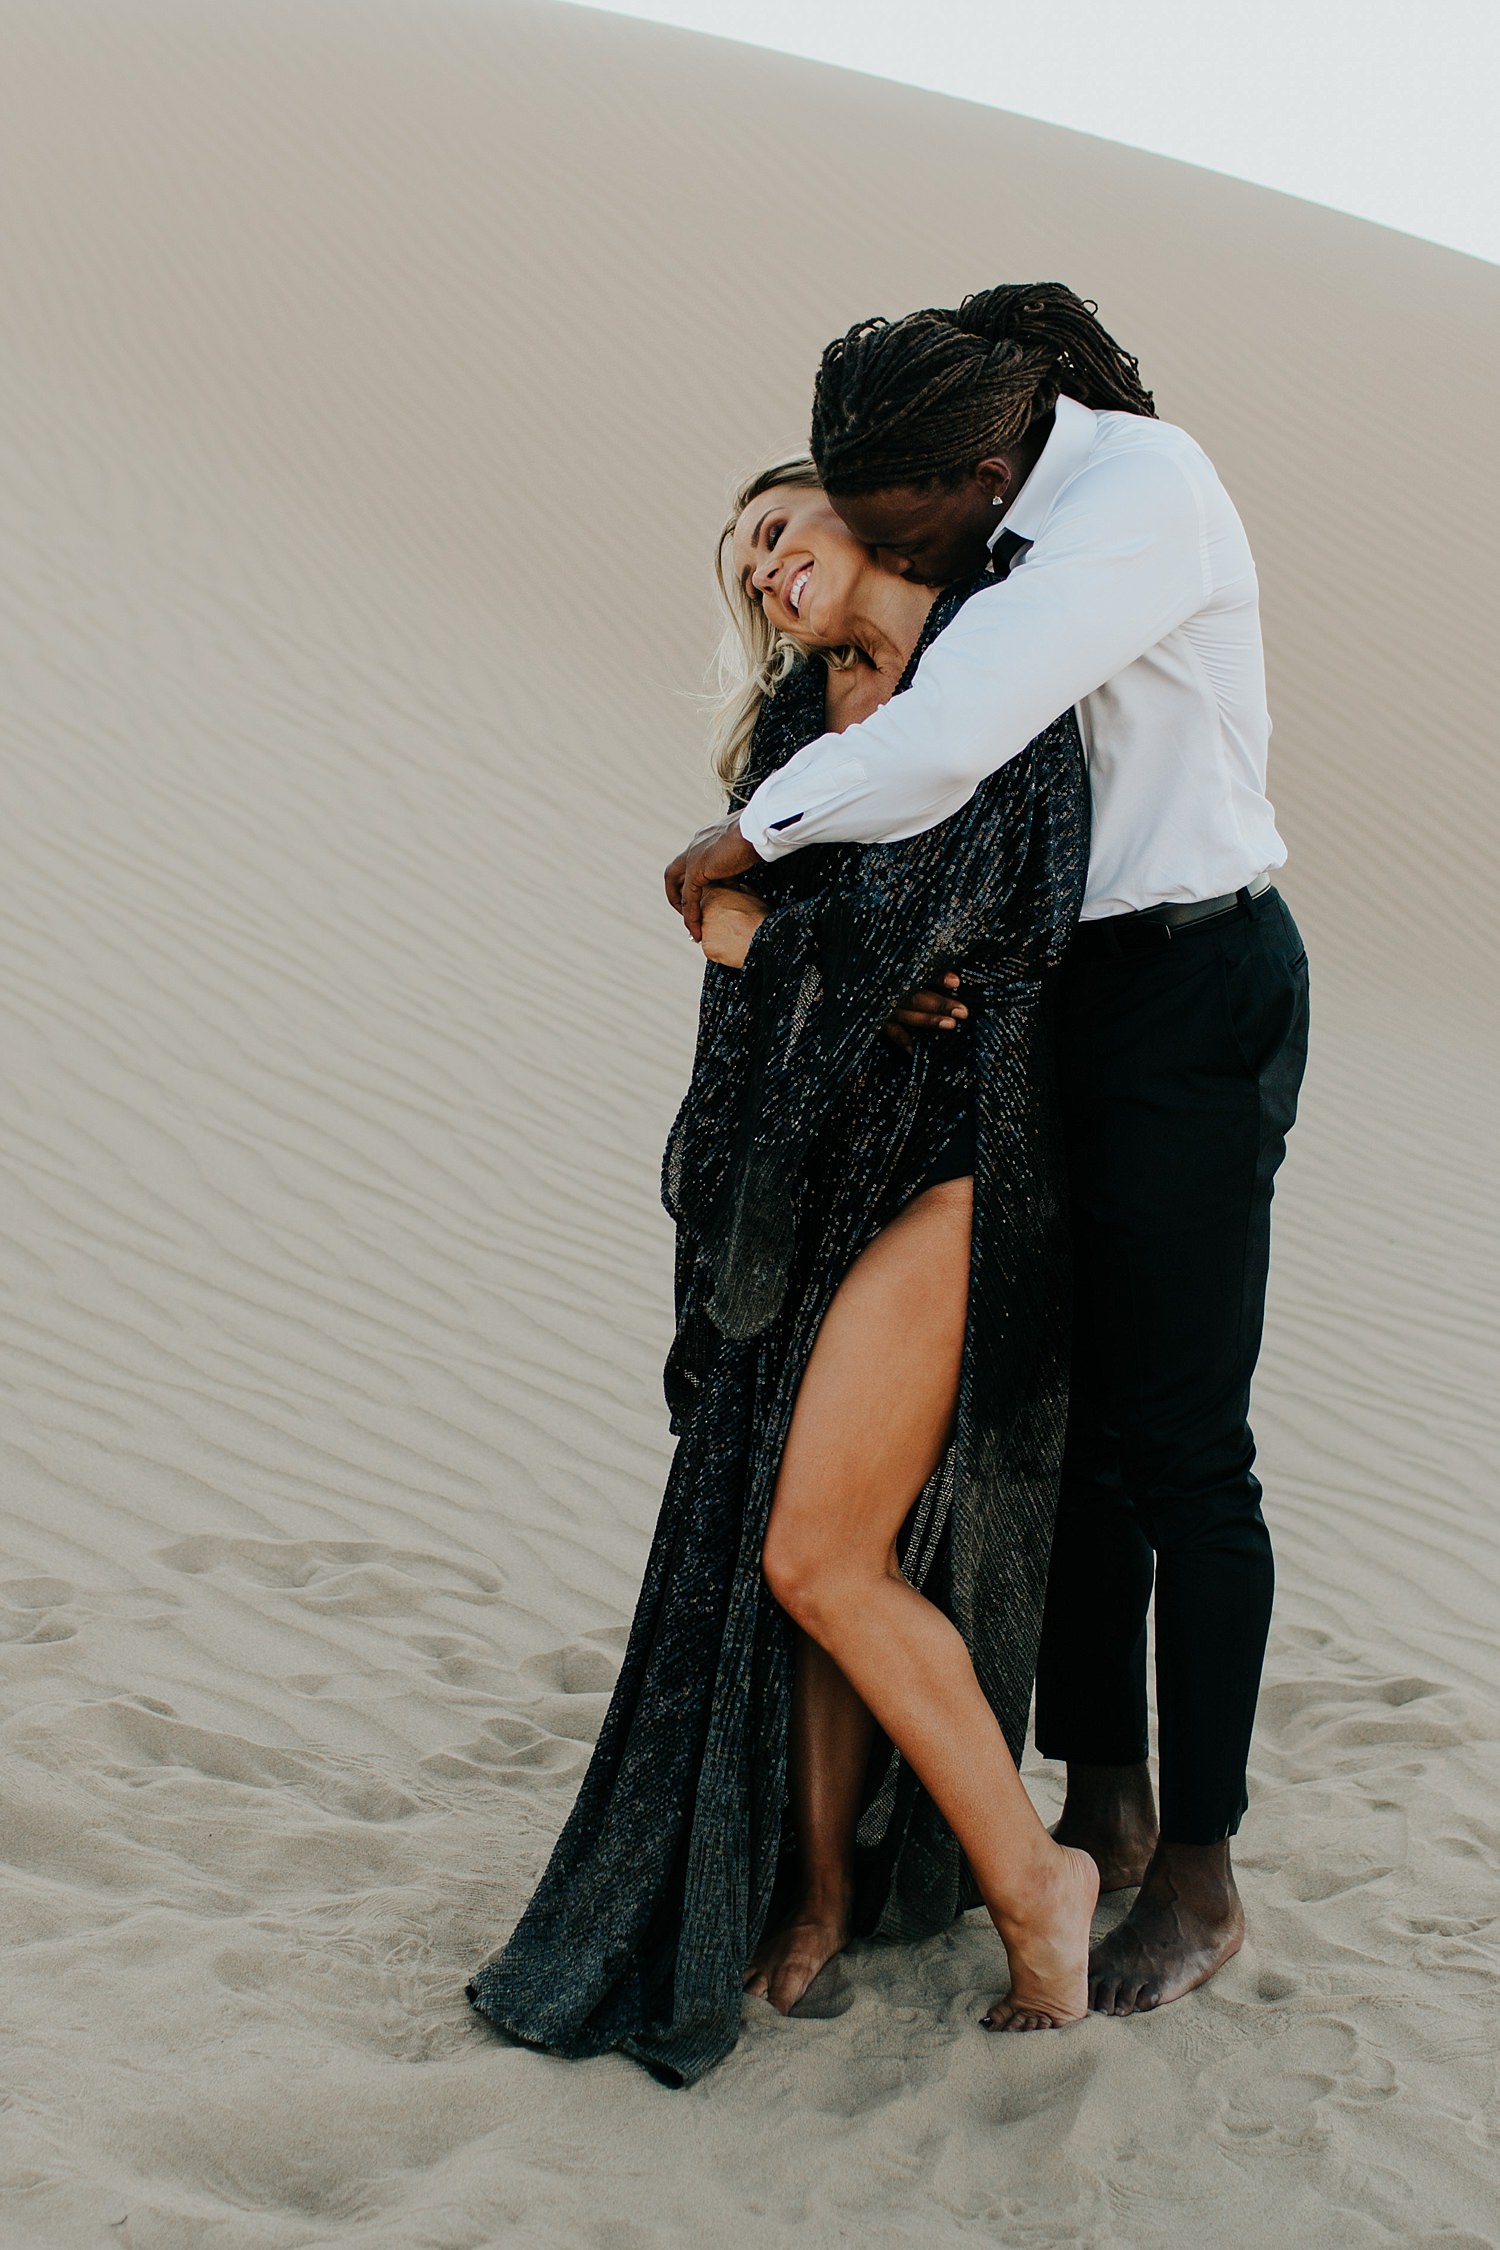 Sand Dunes Engagement Photographer | https://alexandriamonette.com